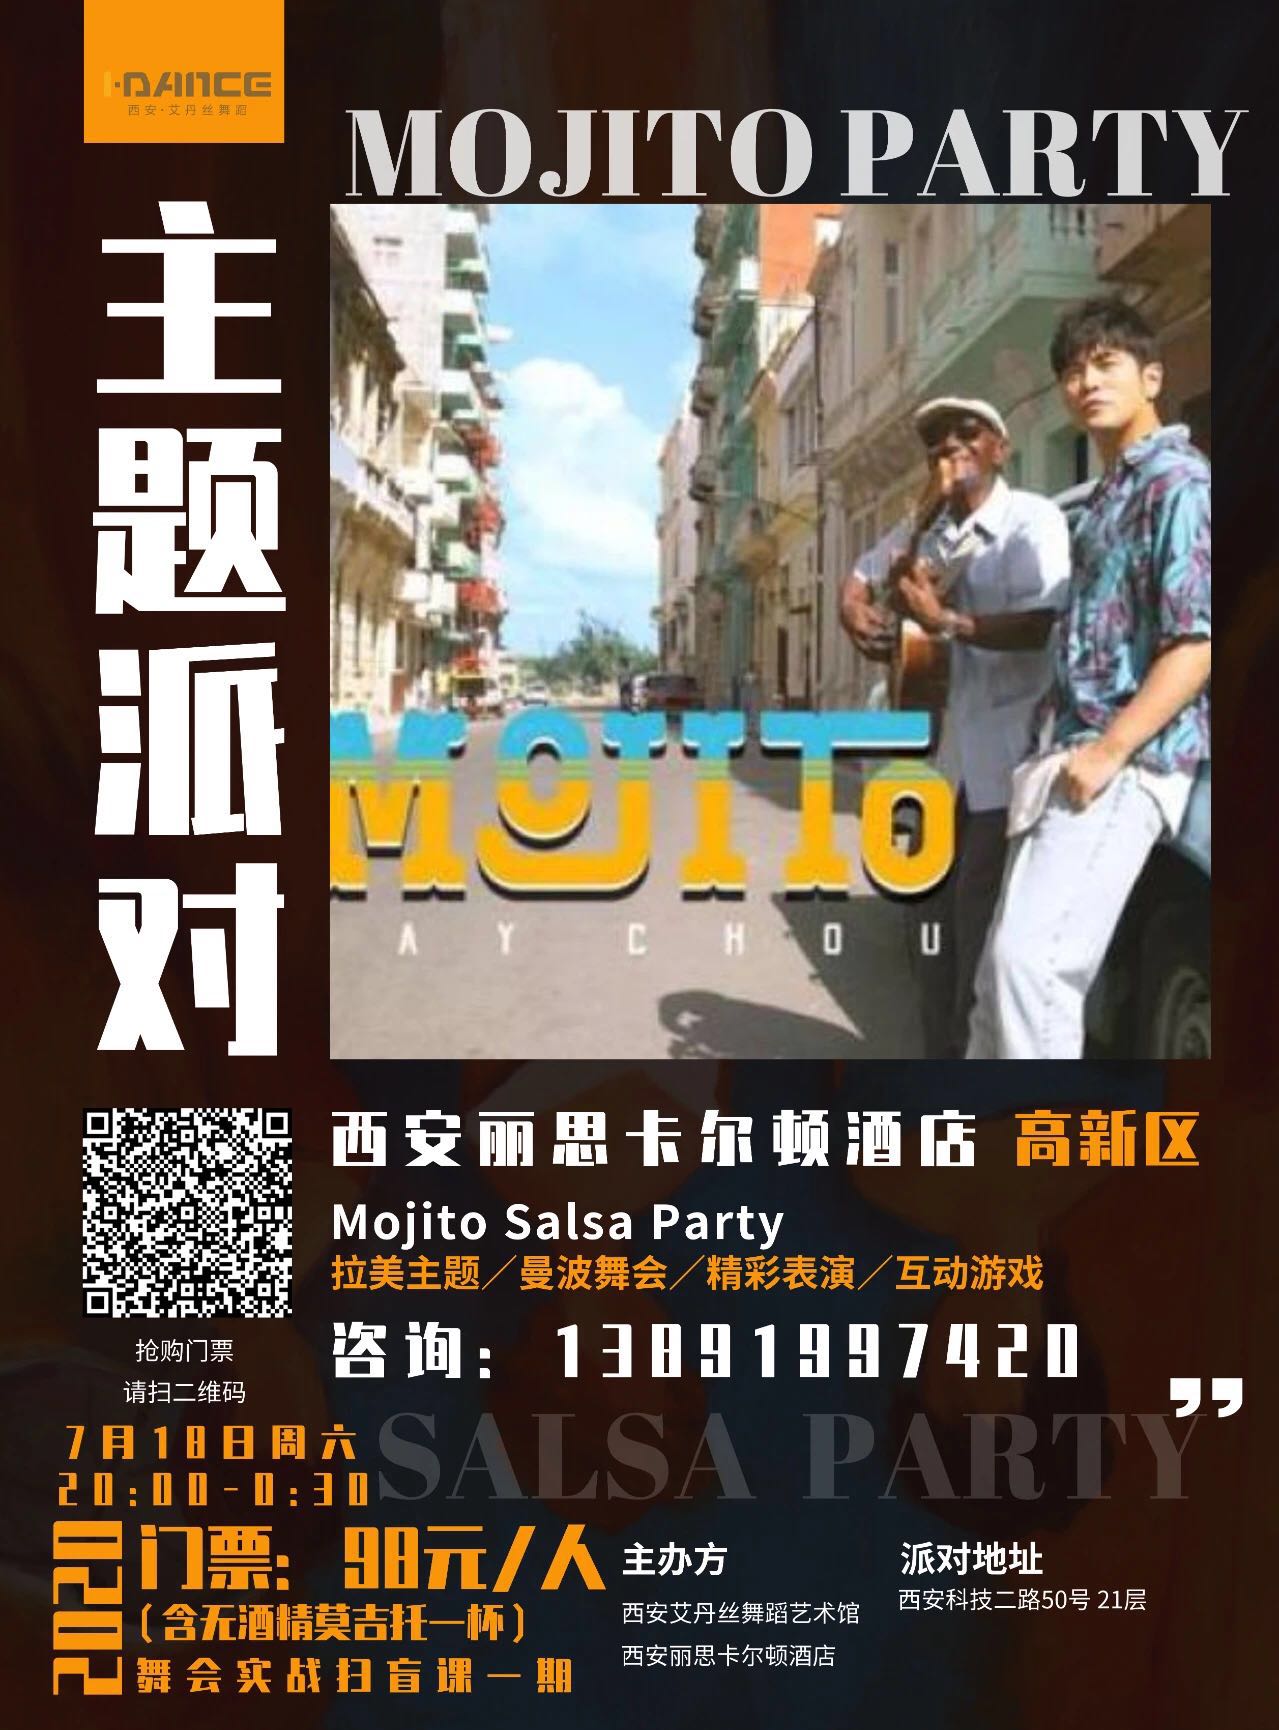 July 18 Mojito Salsa Party chengdu expat